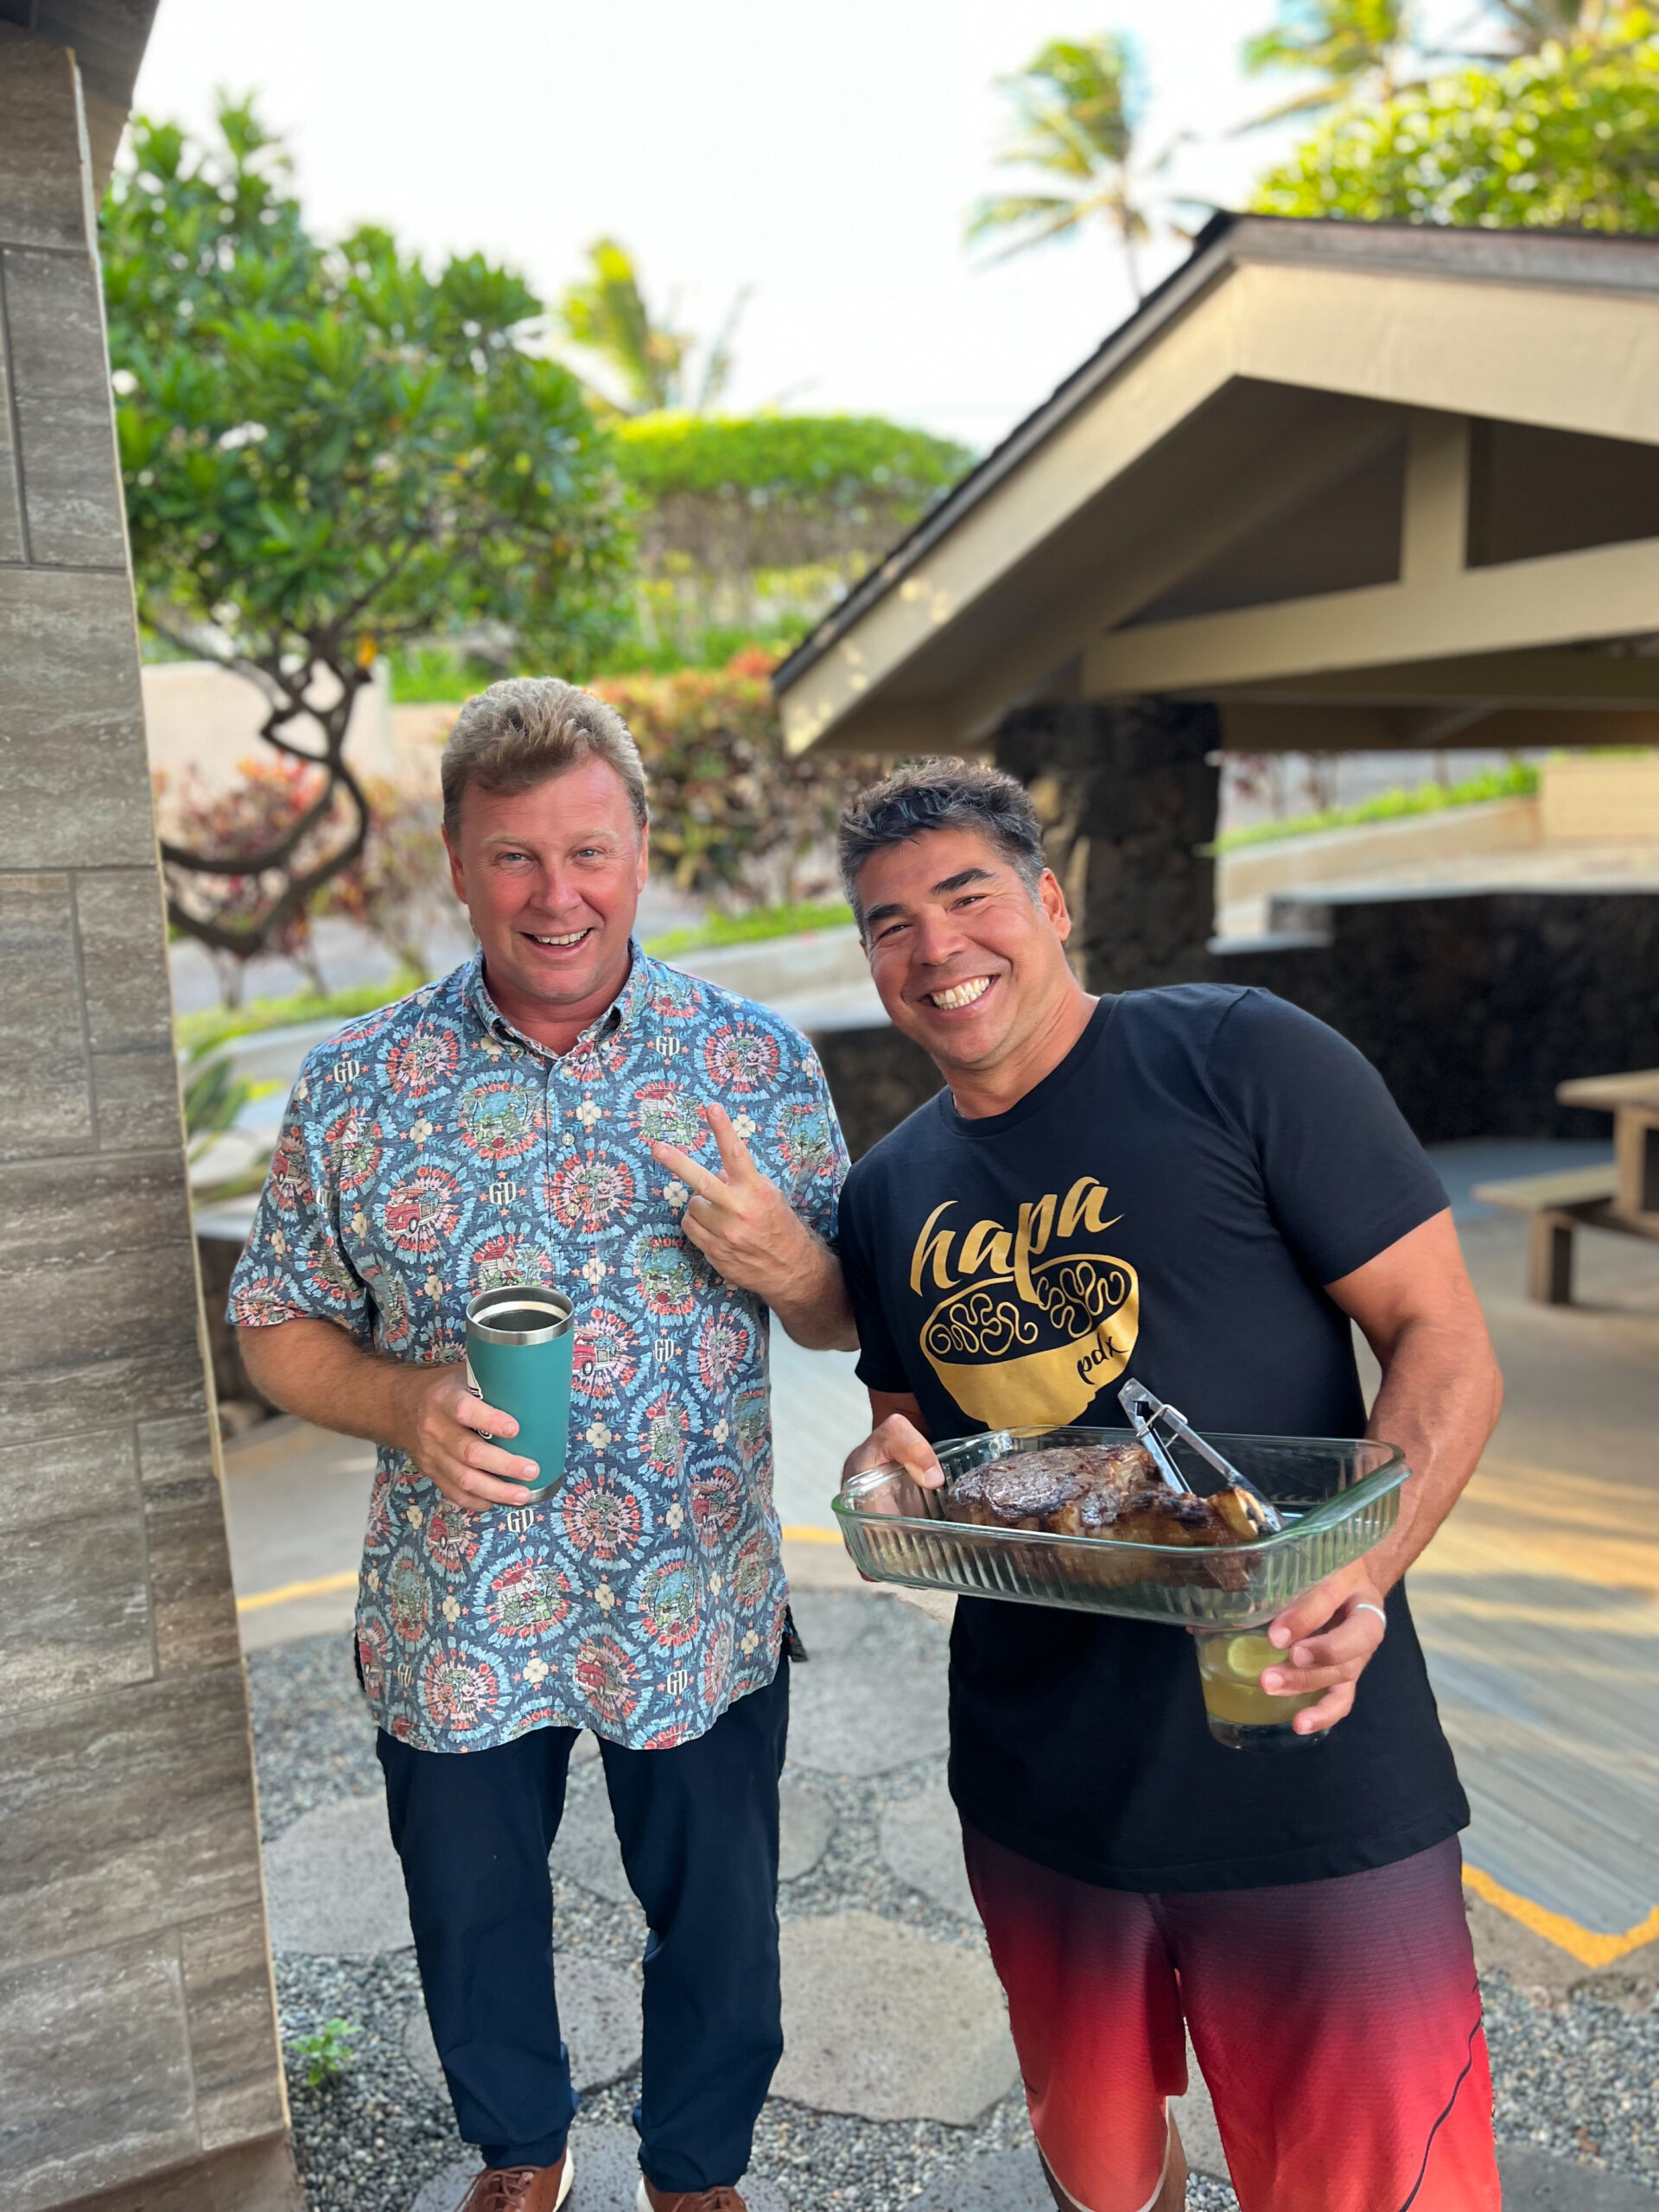 Michael Littman Co-founder Hapa Kauai & Hapa PDX